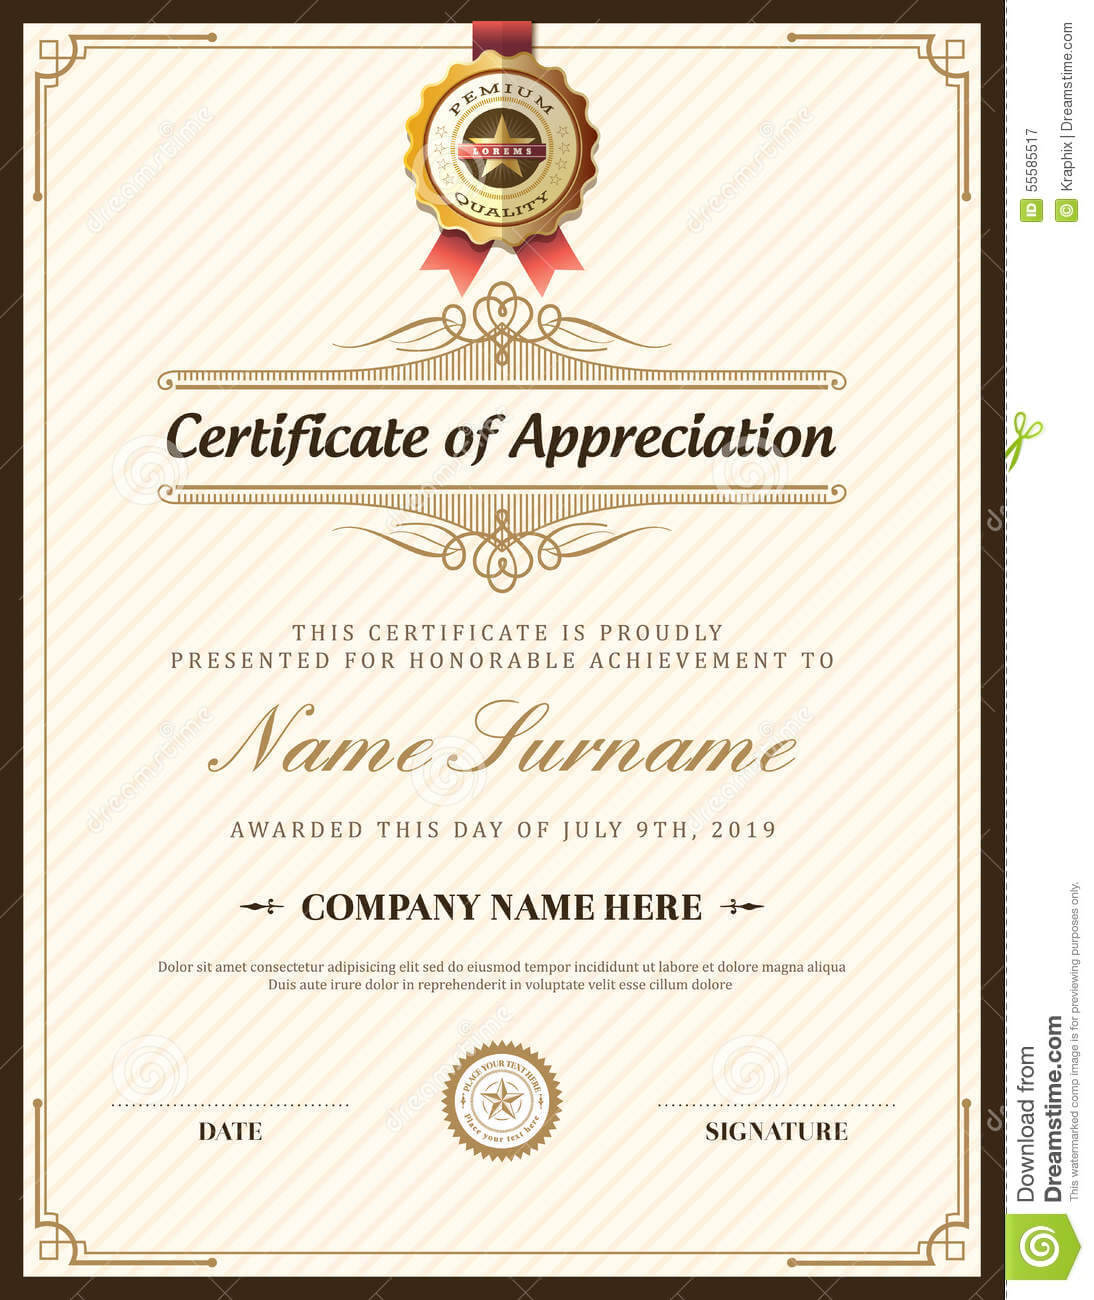 Certificates Of Appreciation Templates Free Within Army Certificate Of Appreciation Template